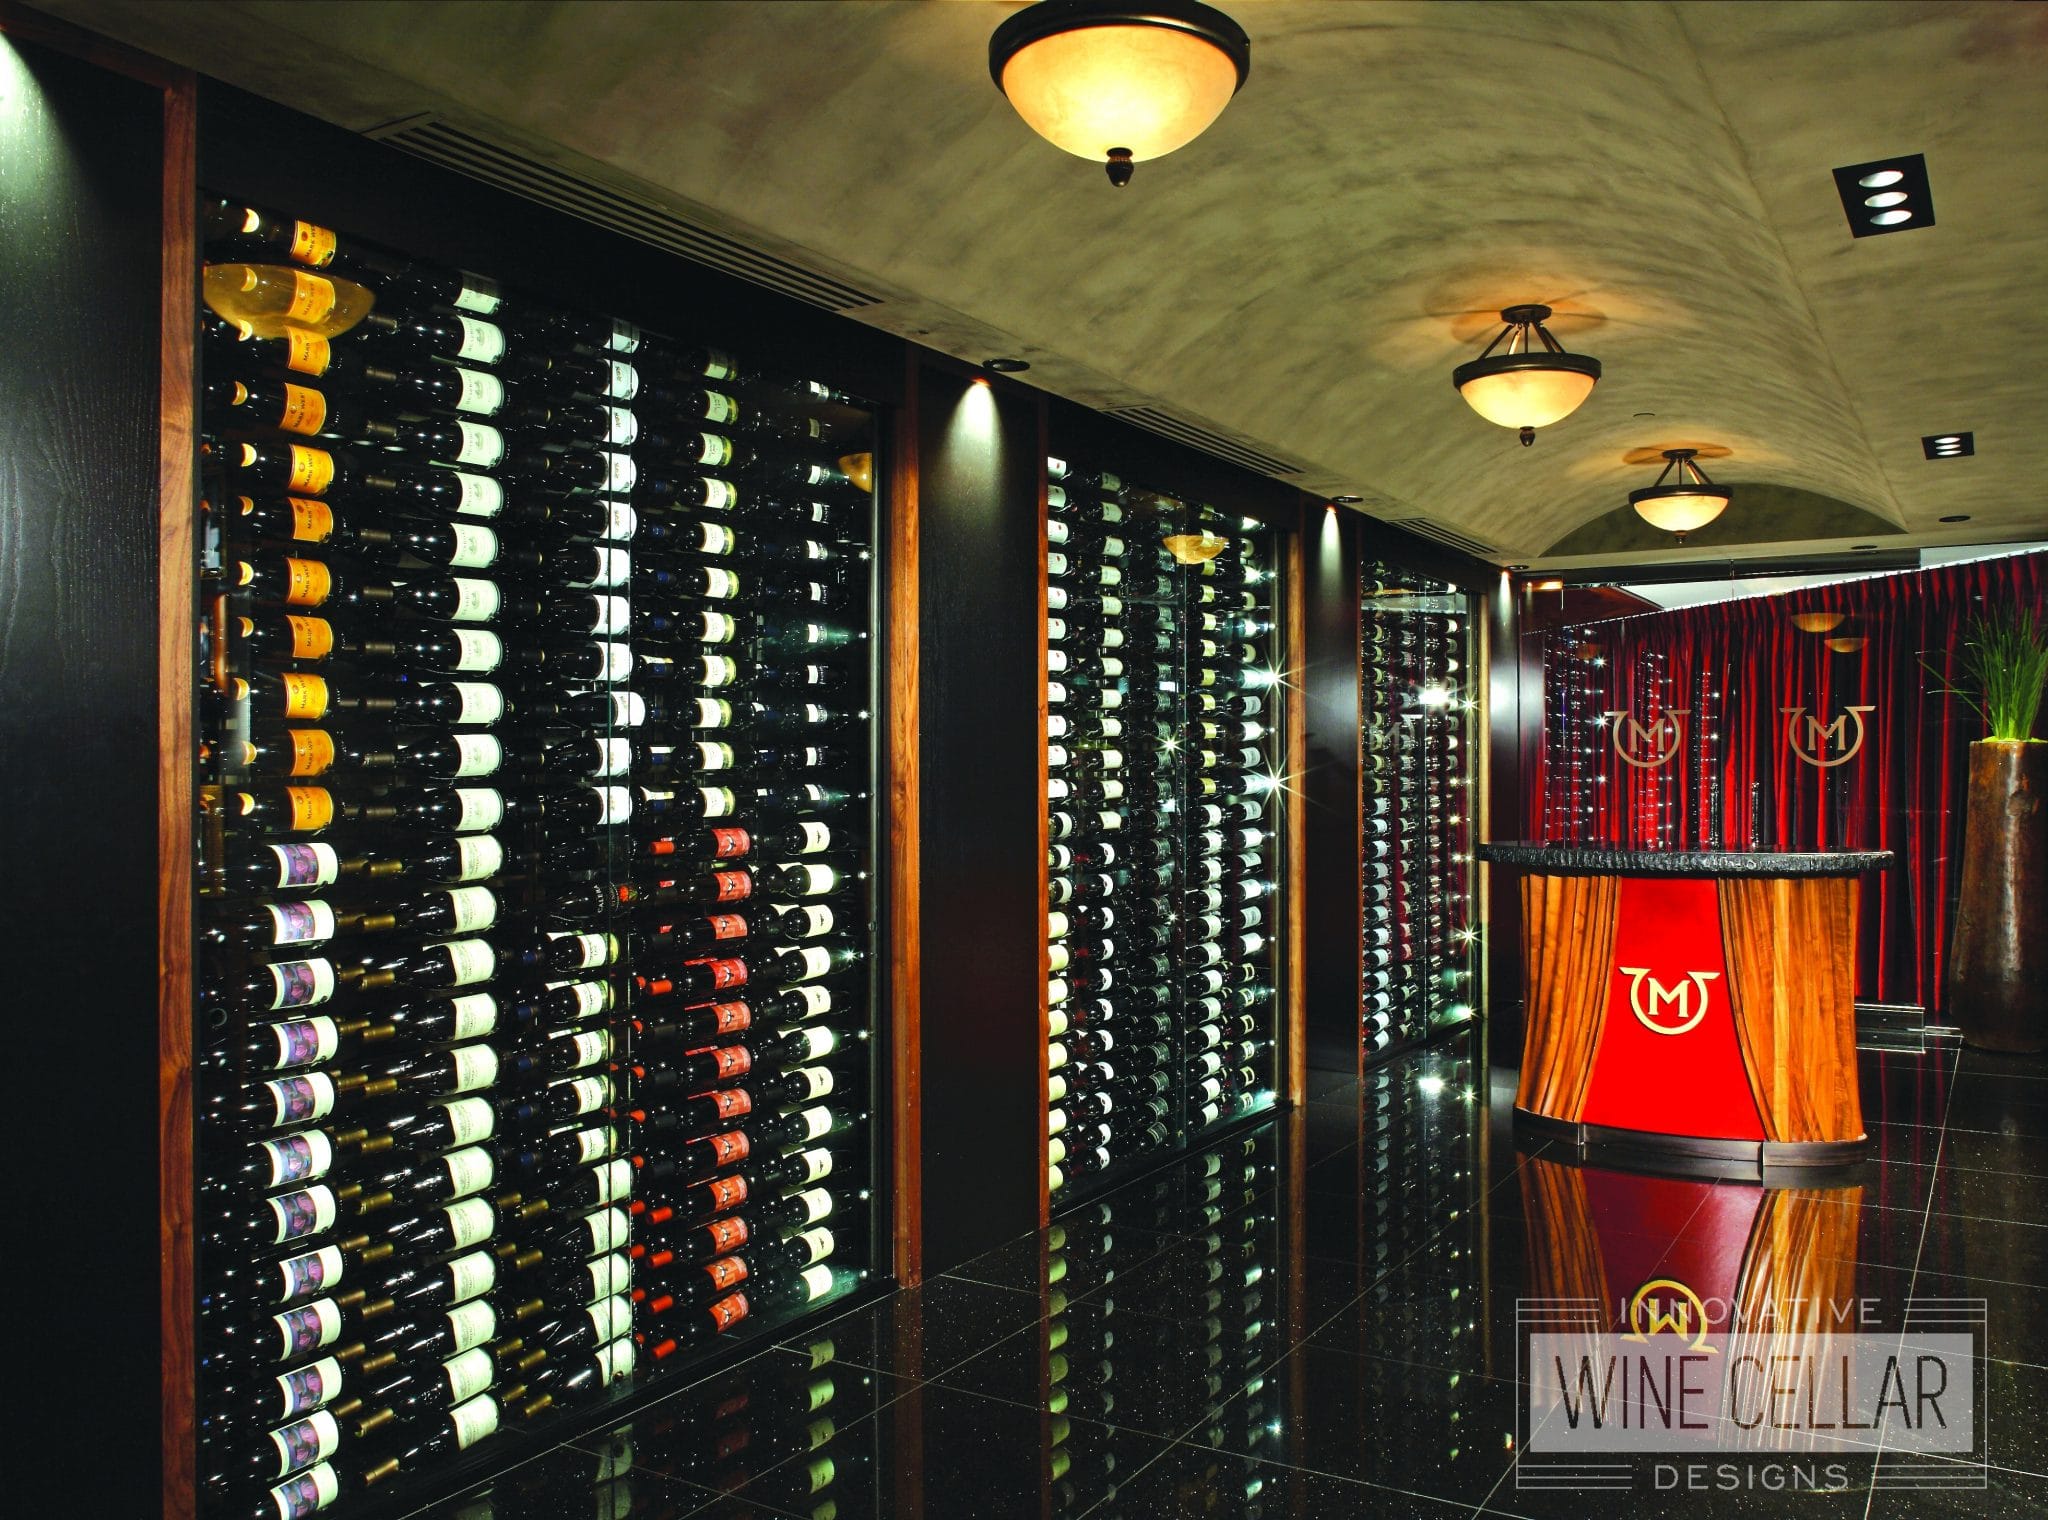 Stunning wine wall cellar at Mastro's